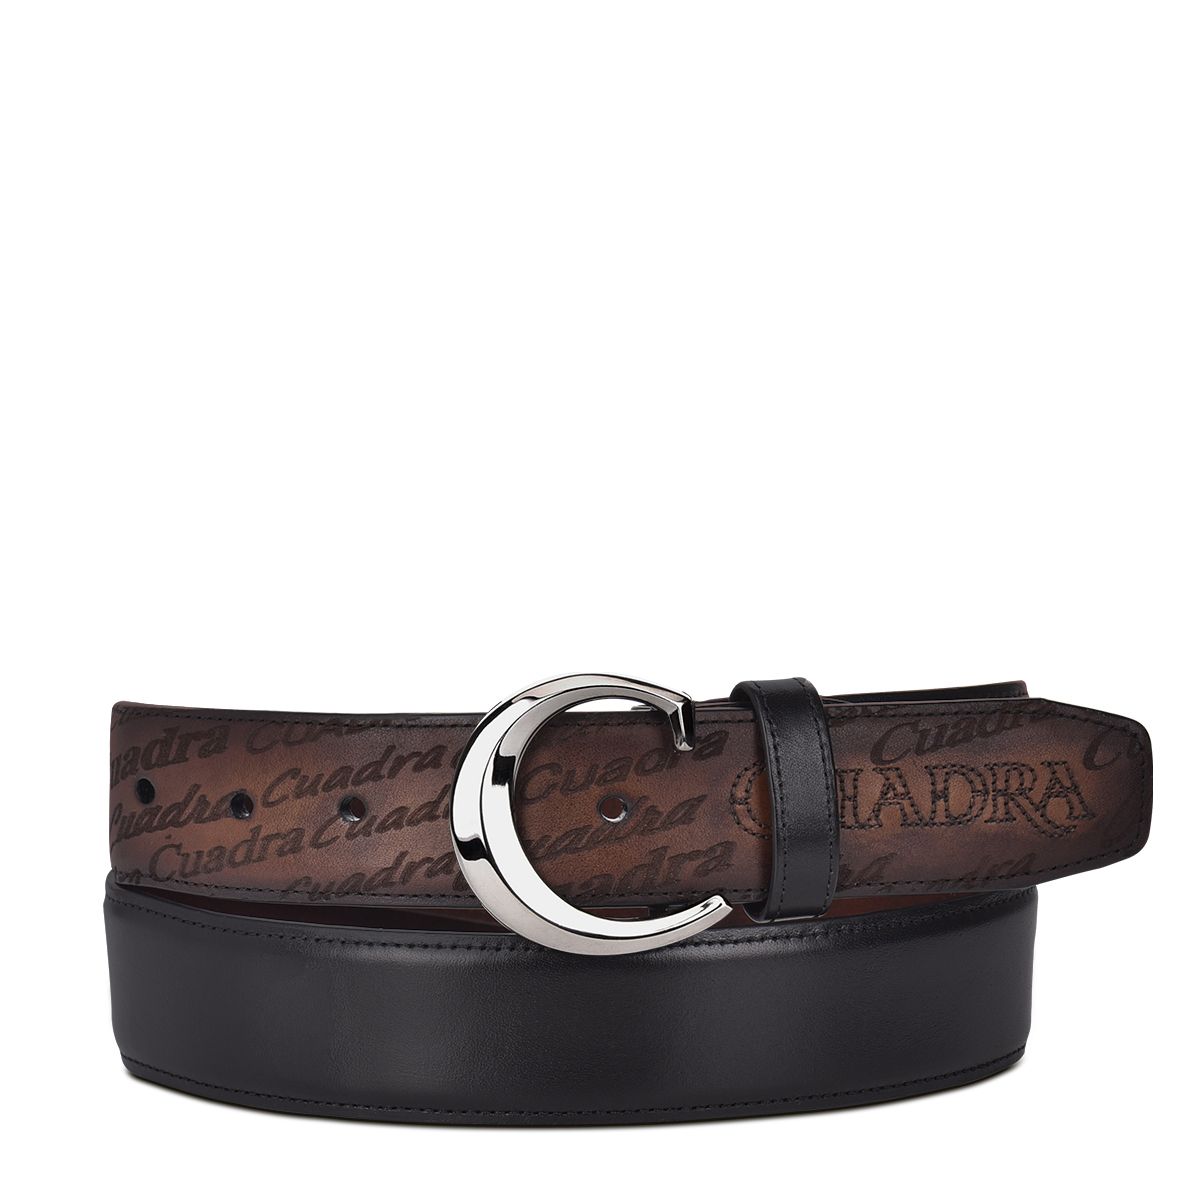 CS540RS - Cuadra negro casual dress cowhide leather belt for men-Kuet.us